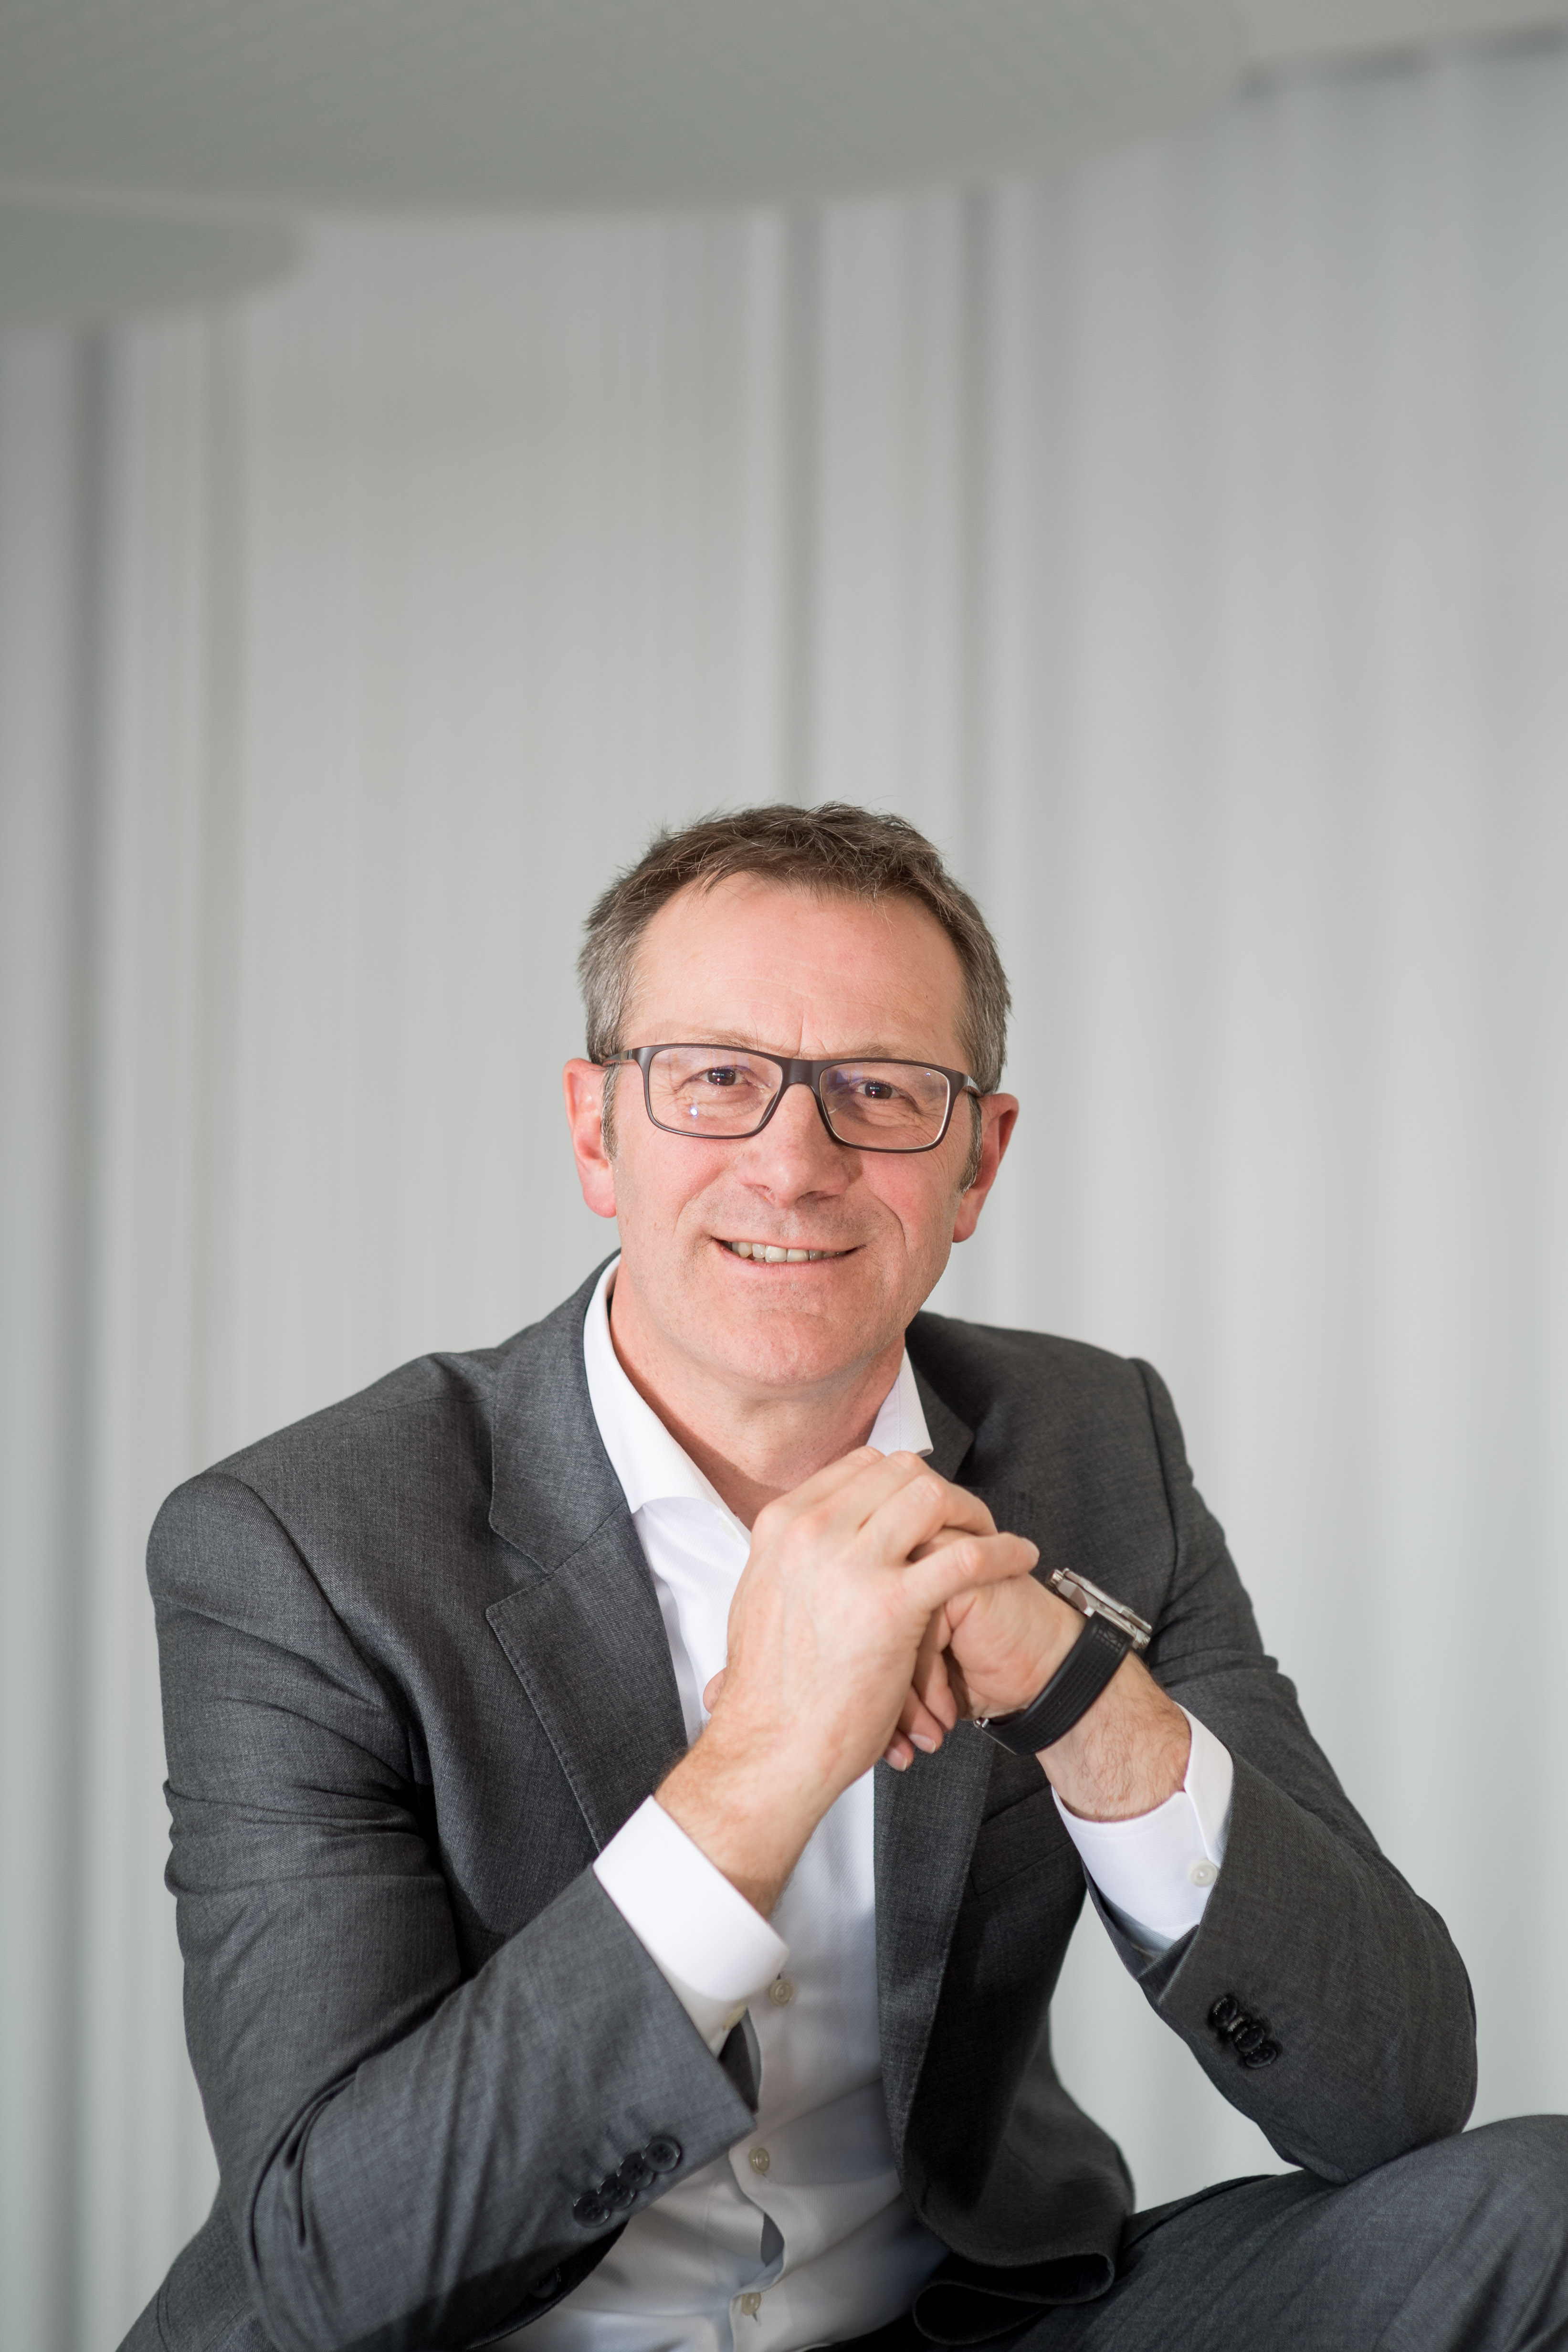 Rolf Najork, Member of the Board of Management